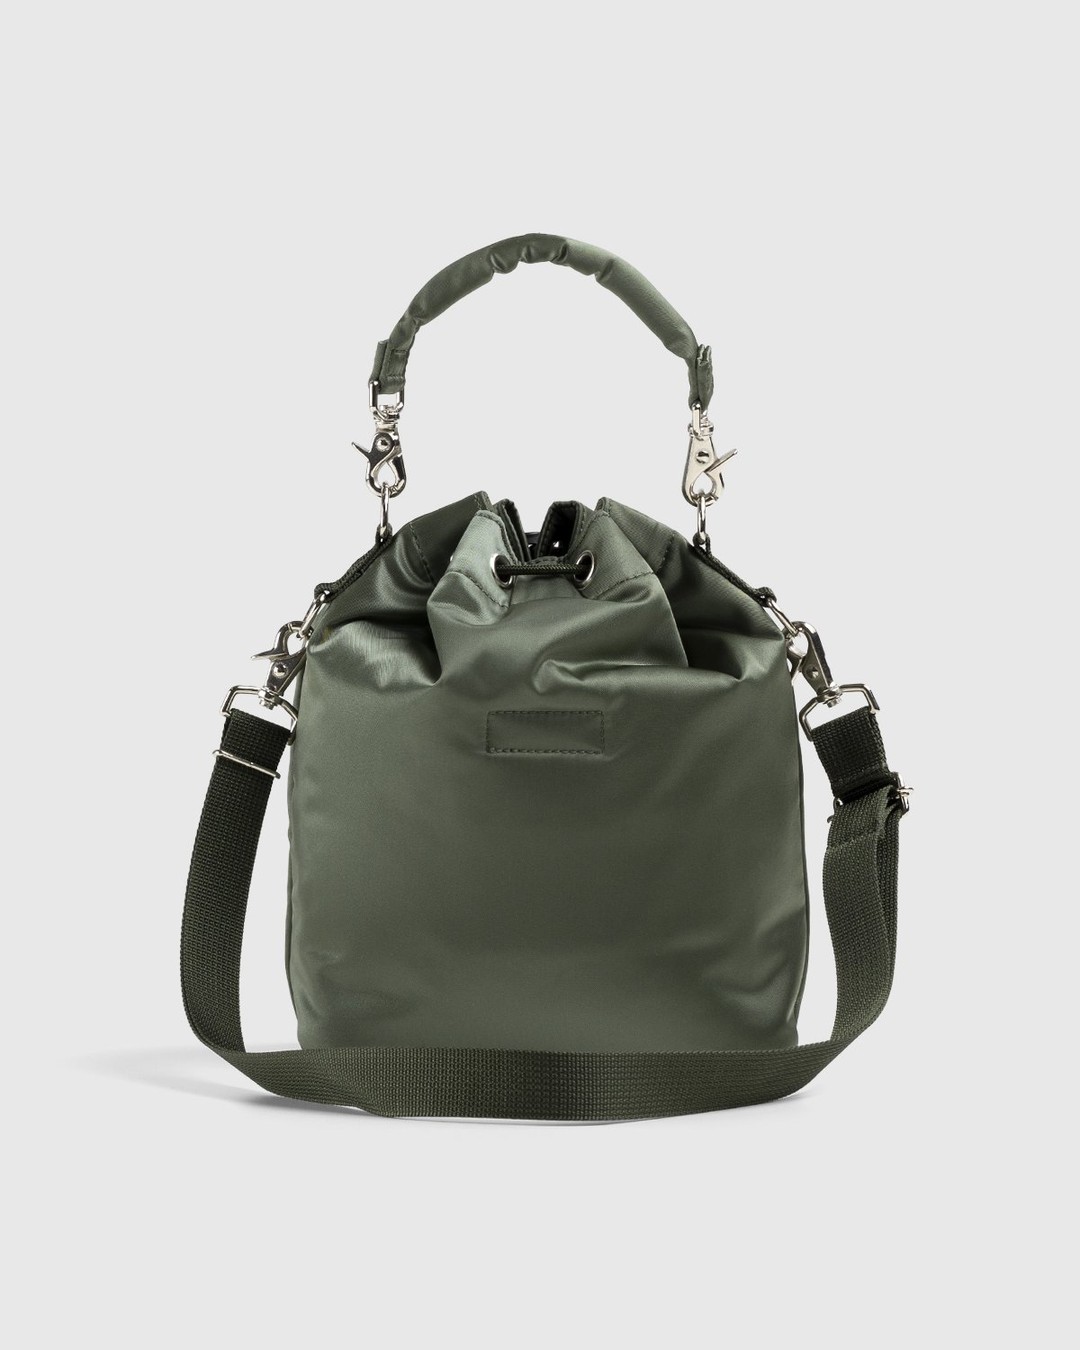 Porter-Yoshida & Co. – Balloon Sac Sage Green - Shoulder Bags - Green - Image 2